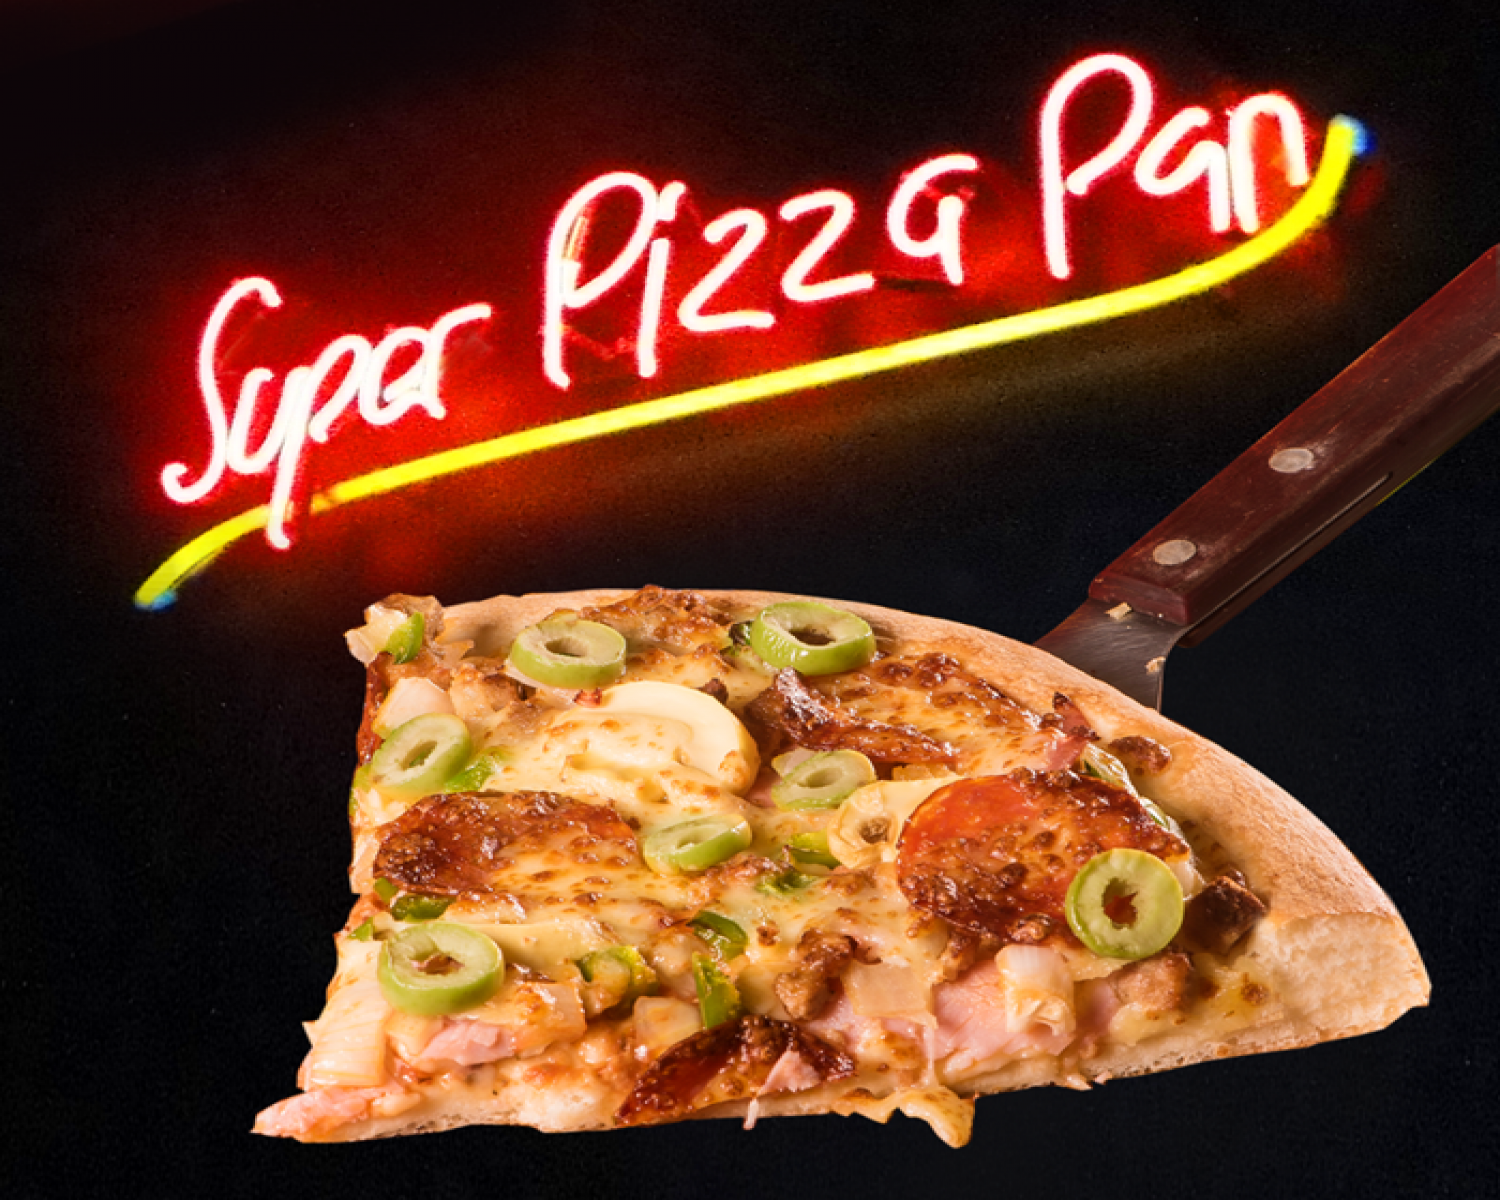 Super Pizza Pan  Agenda Sorocaba